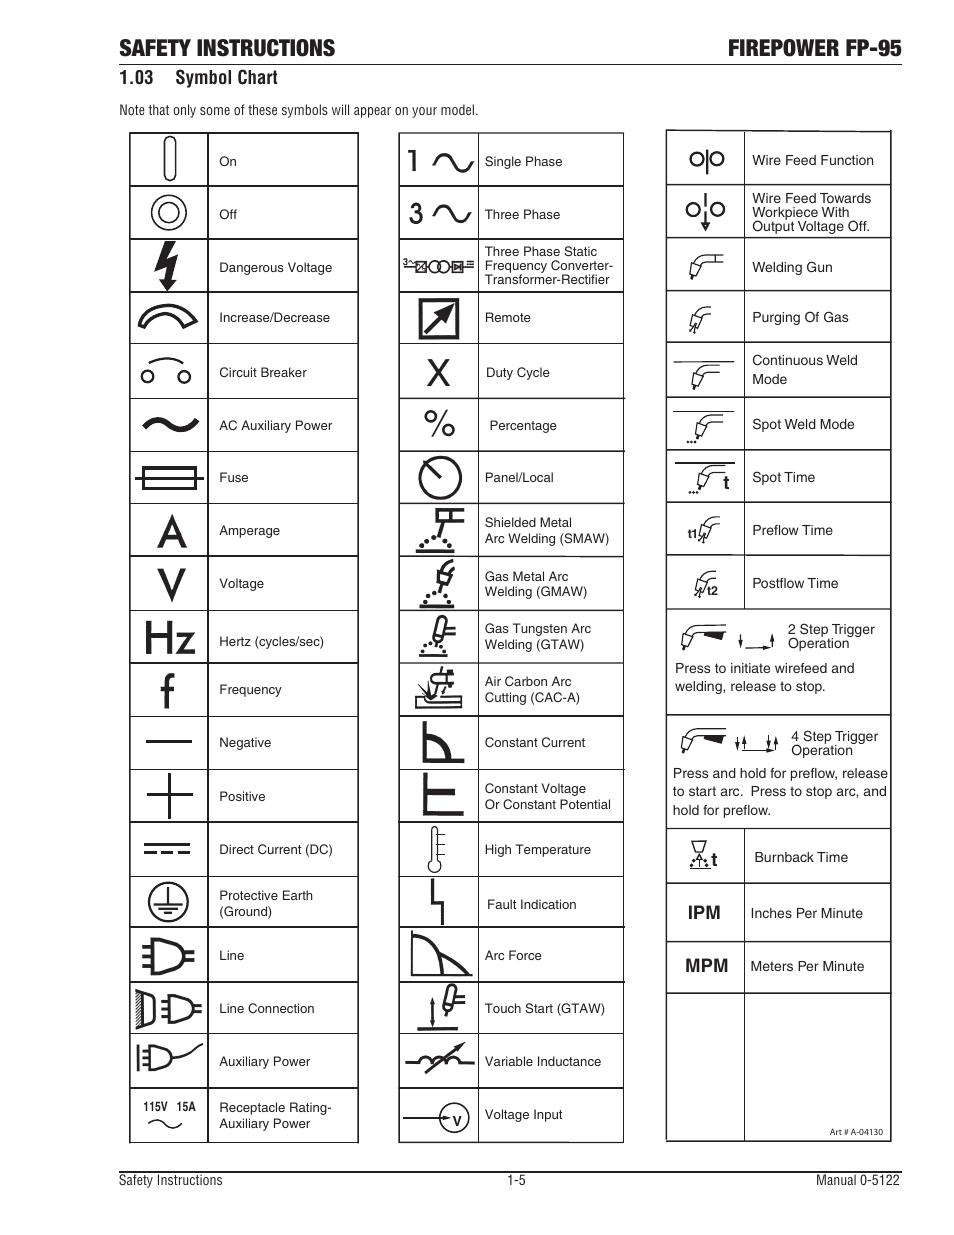 03 symbol chart, Symbol chart -5, Safety instructions firepower fp-95 | Ipm mpm t | Tweco FP-95 Mini MIG User Manual | Page 11 / 46